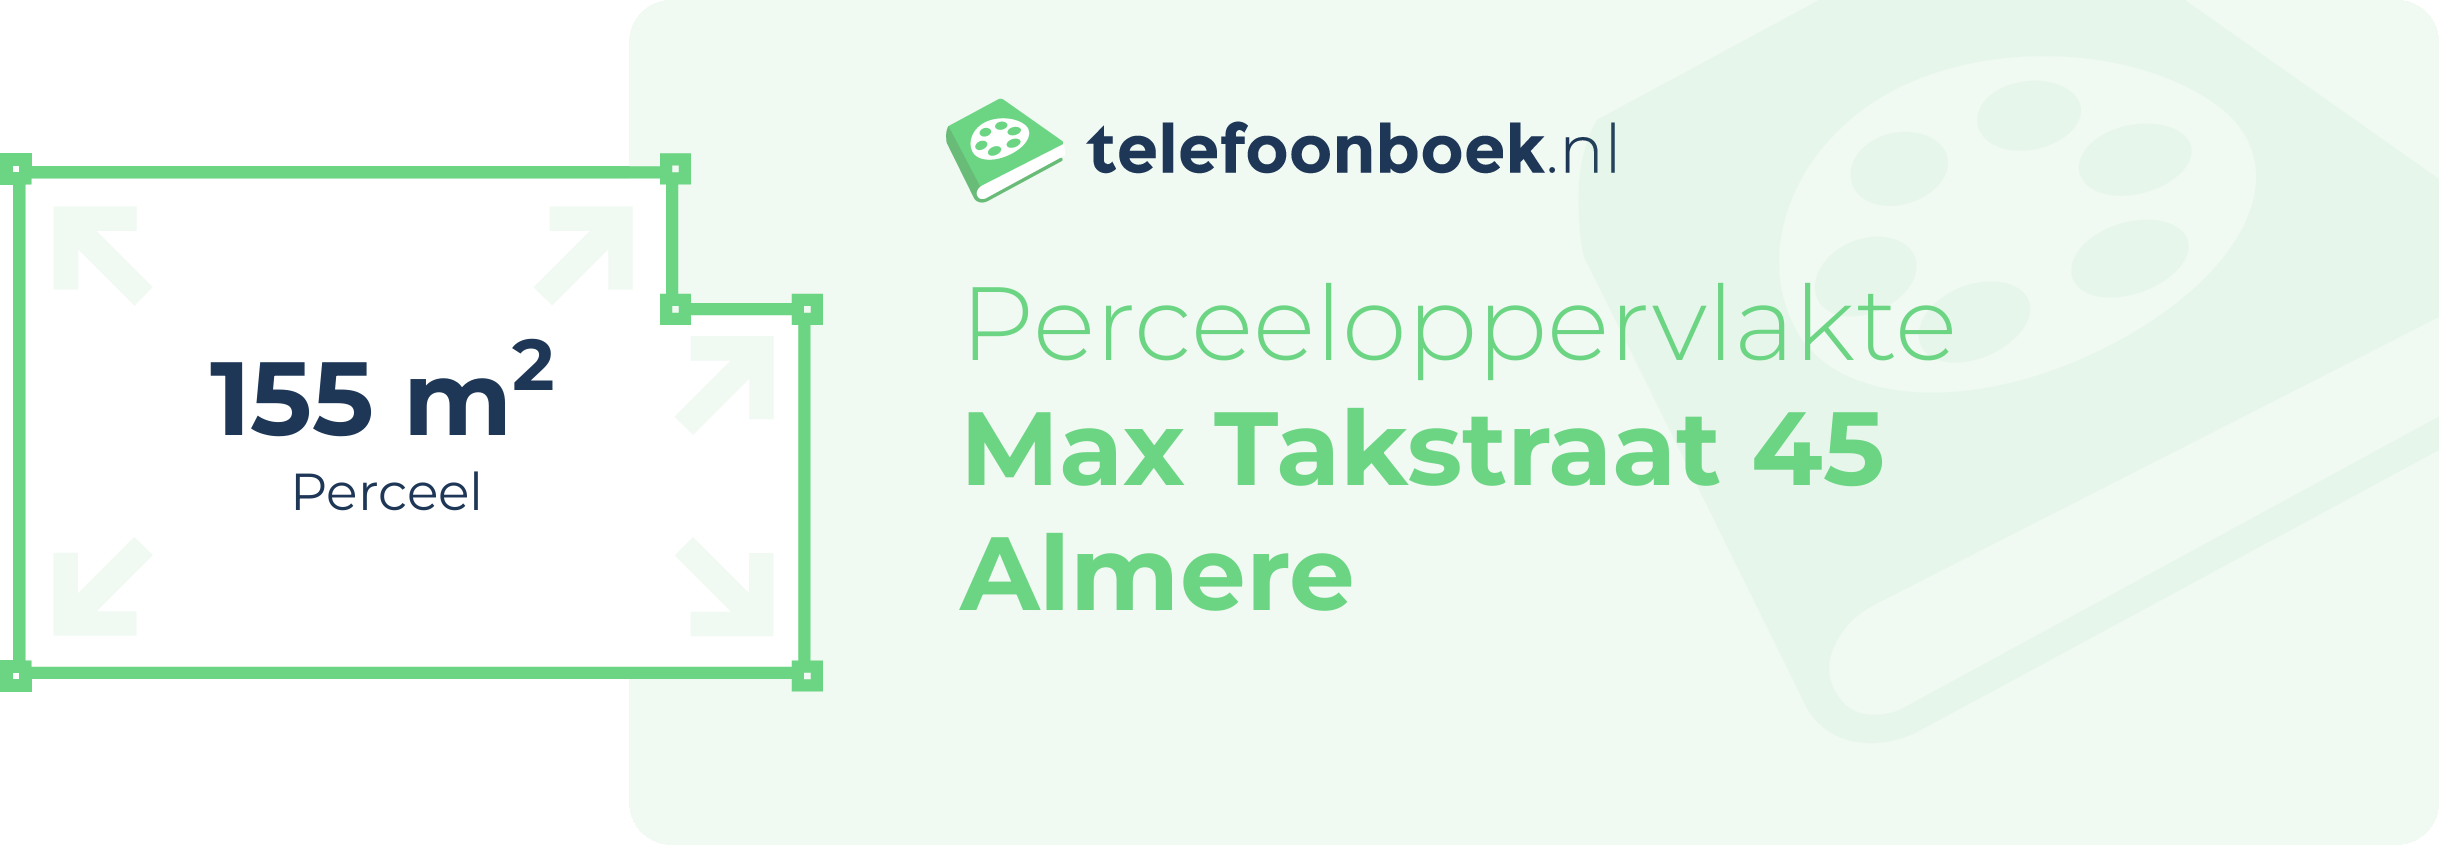 Perceeloppervlakte Max Takstraat 45 Almere